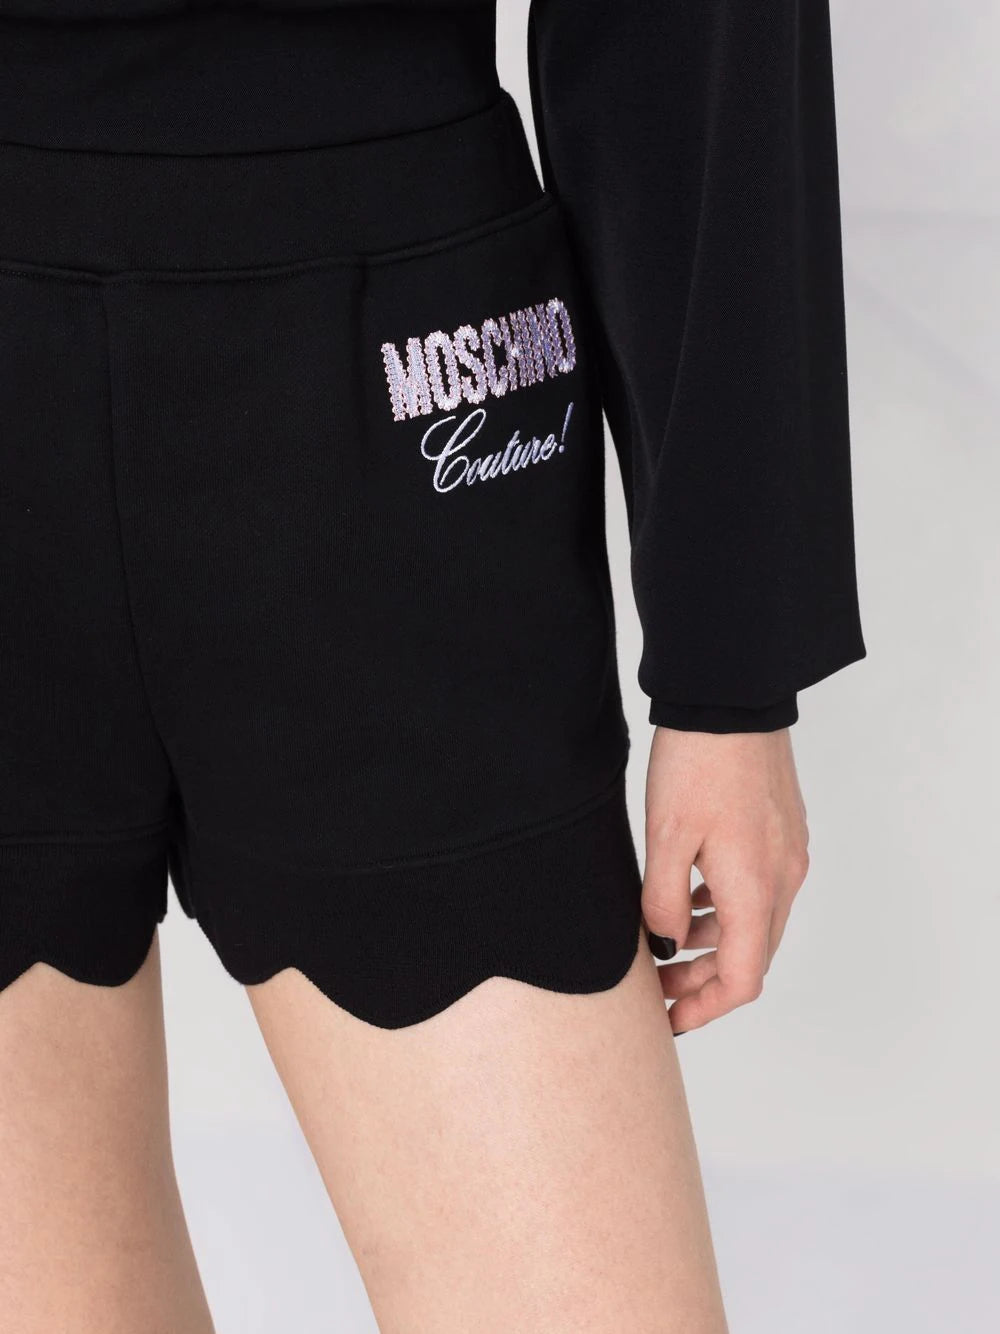 Moschino Black Scalloped Shorts